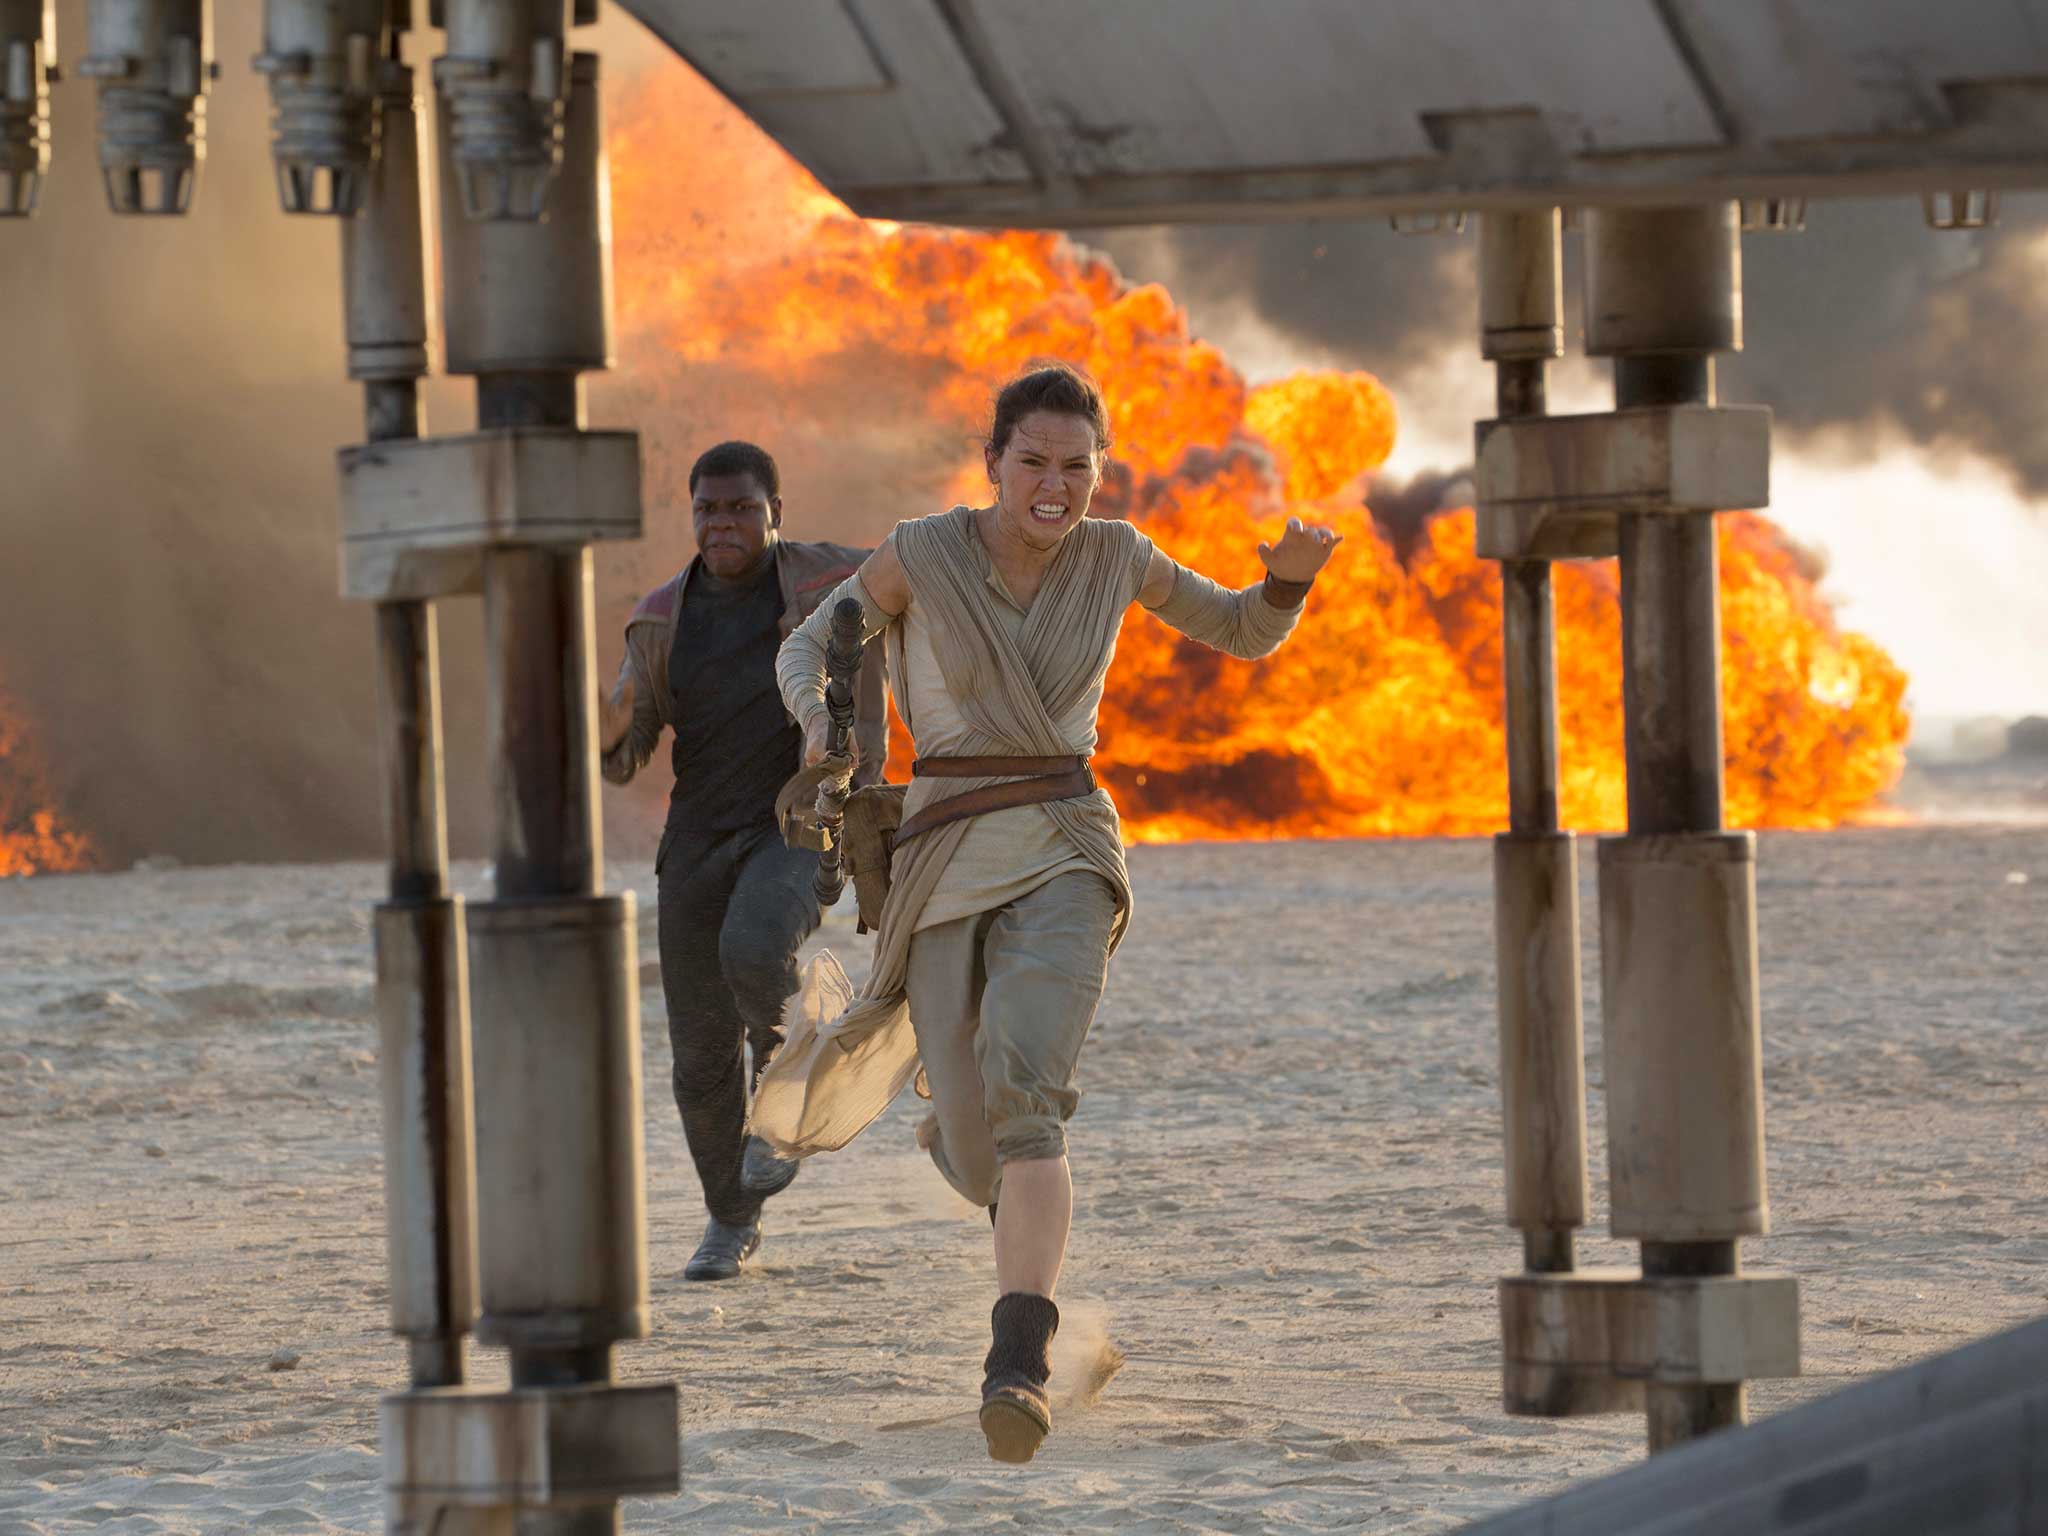 Star Wars: The Force Awakens scene with Finn